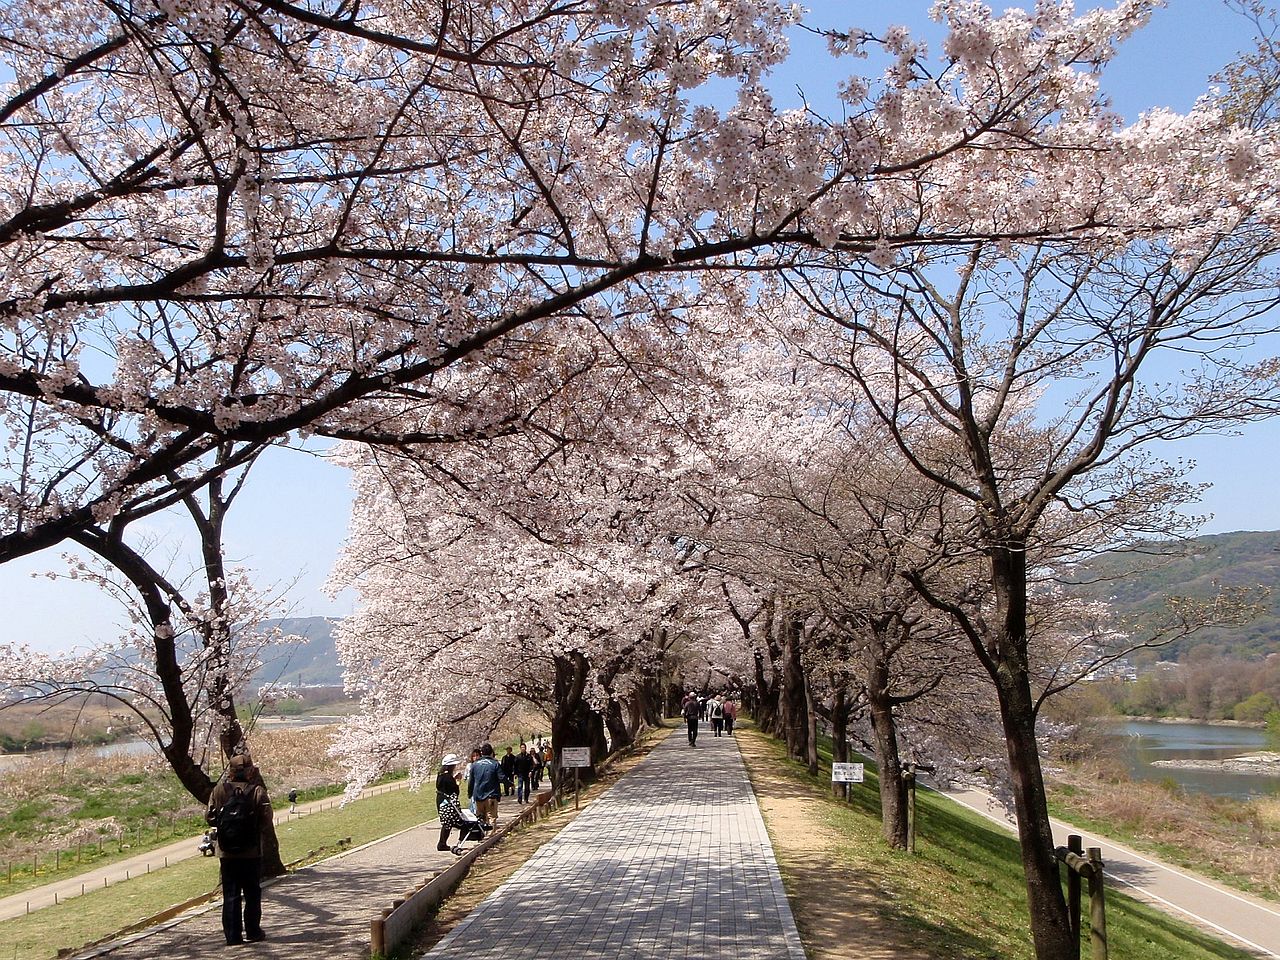 Sakura Kyoto The 10 Most Beautiful Cherry Blossom Spots In Kyoto